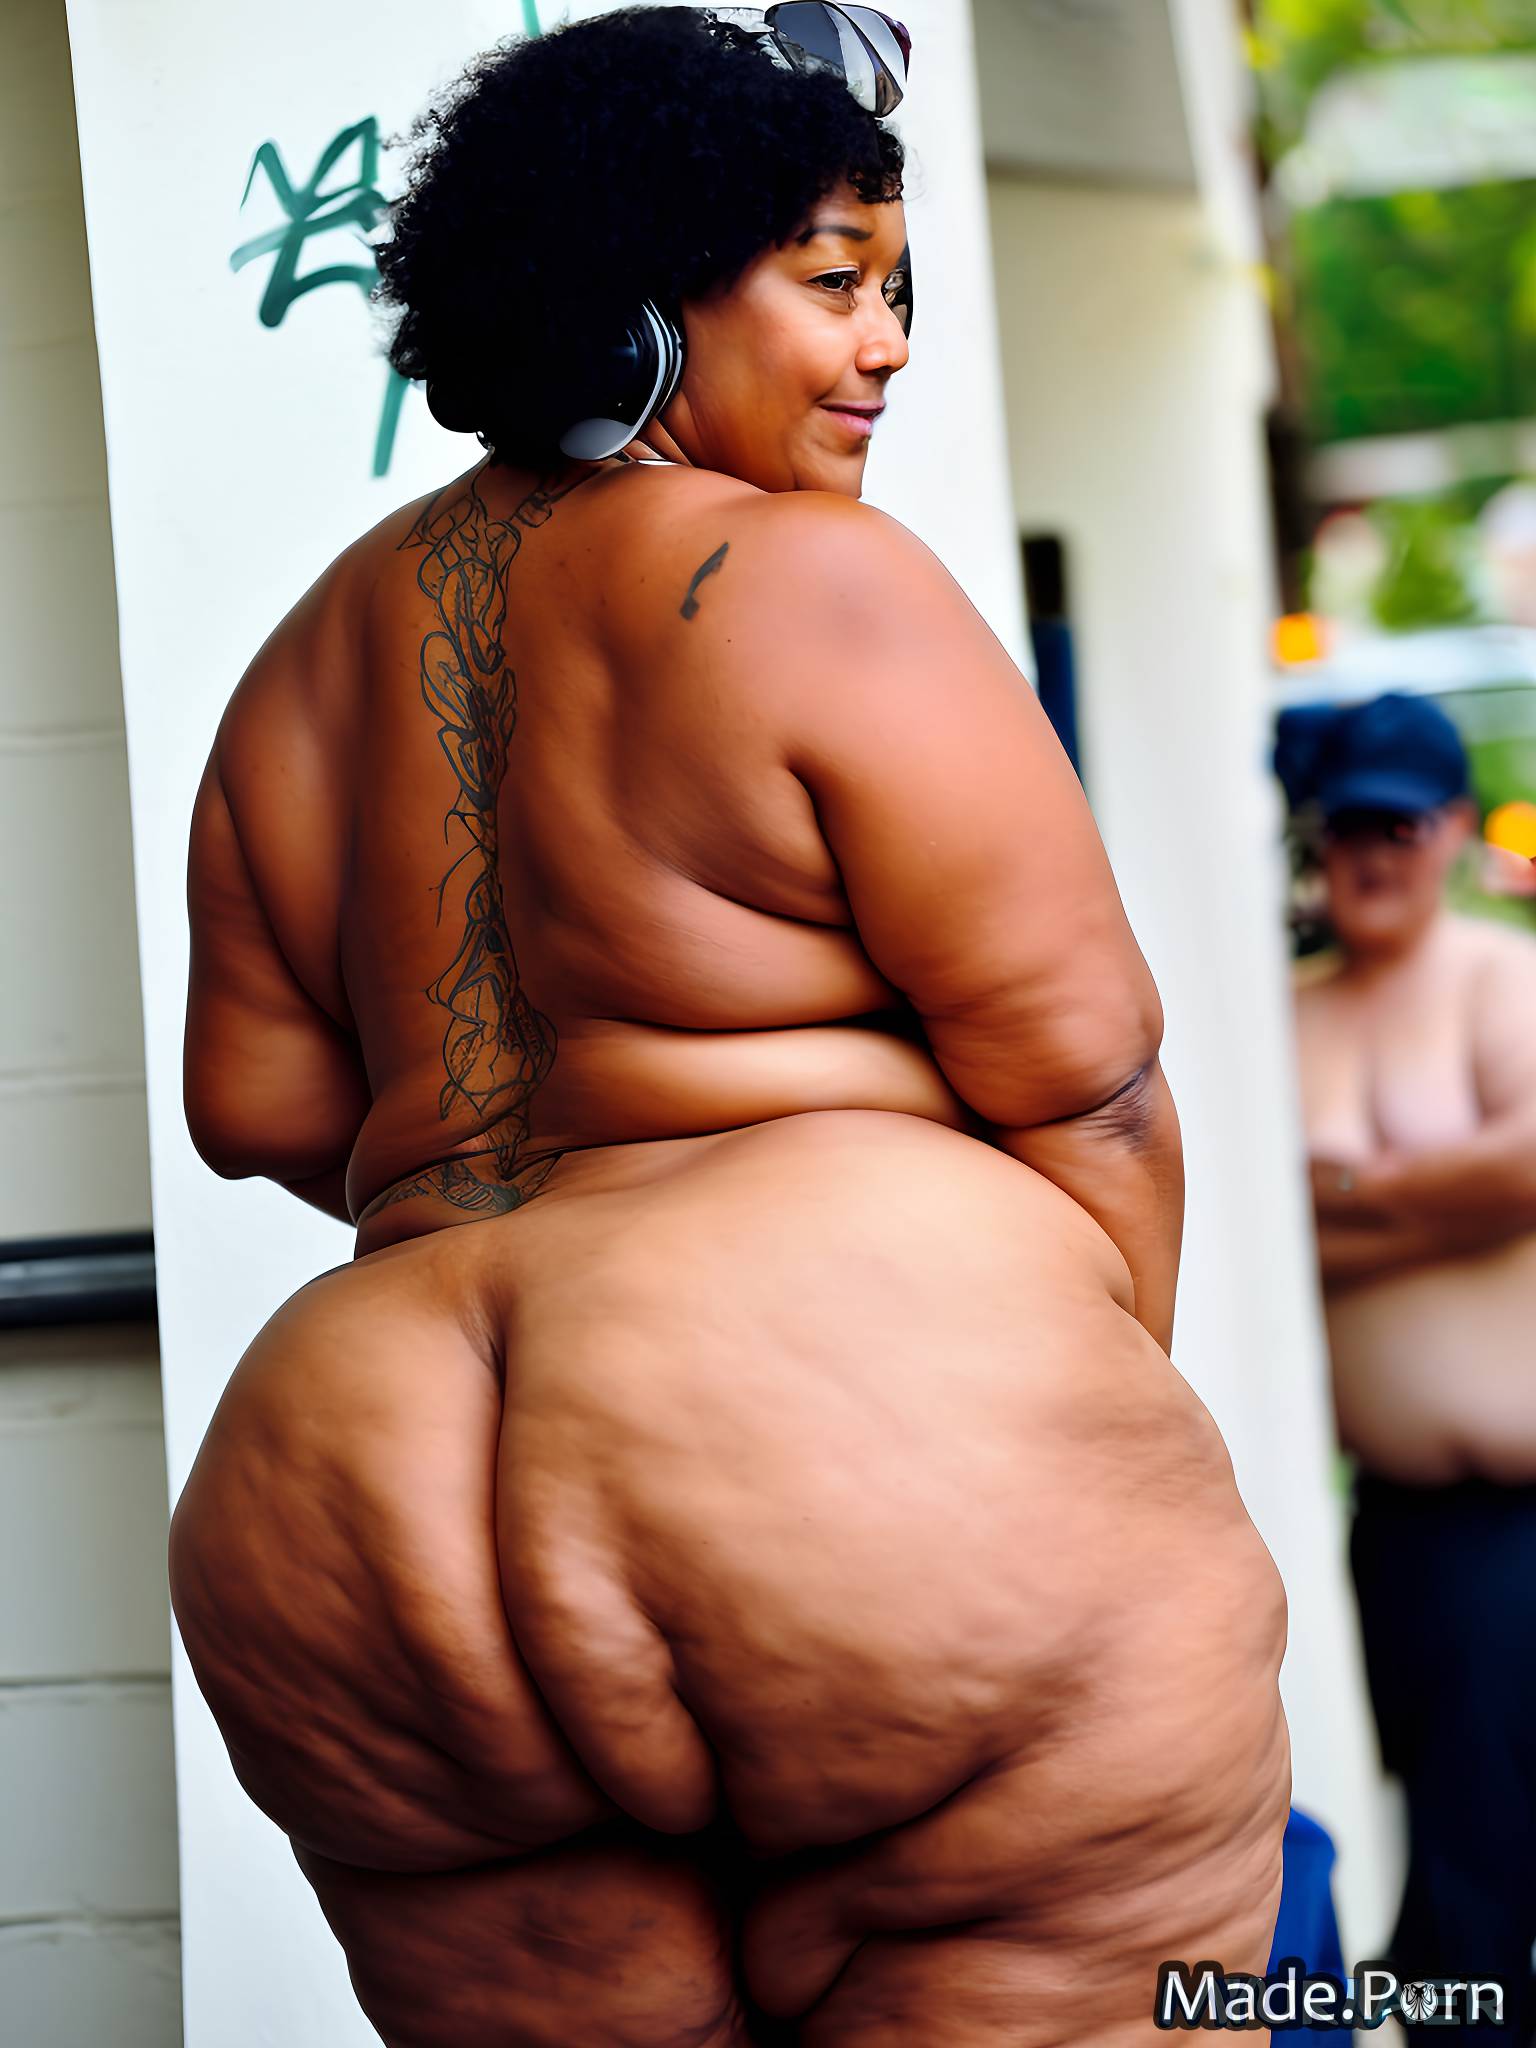 native american photo sideview big ass bimbo woman thick thighs